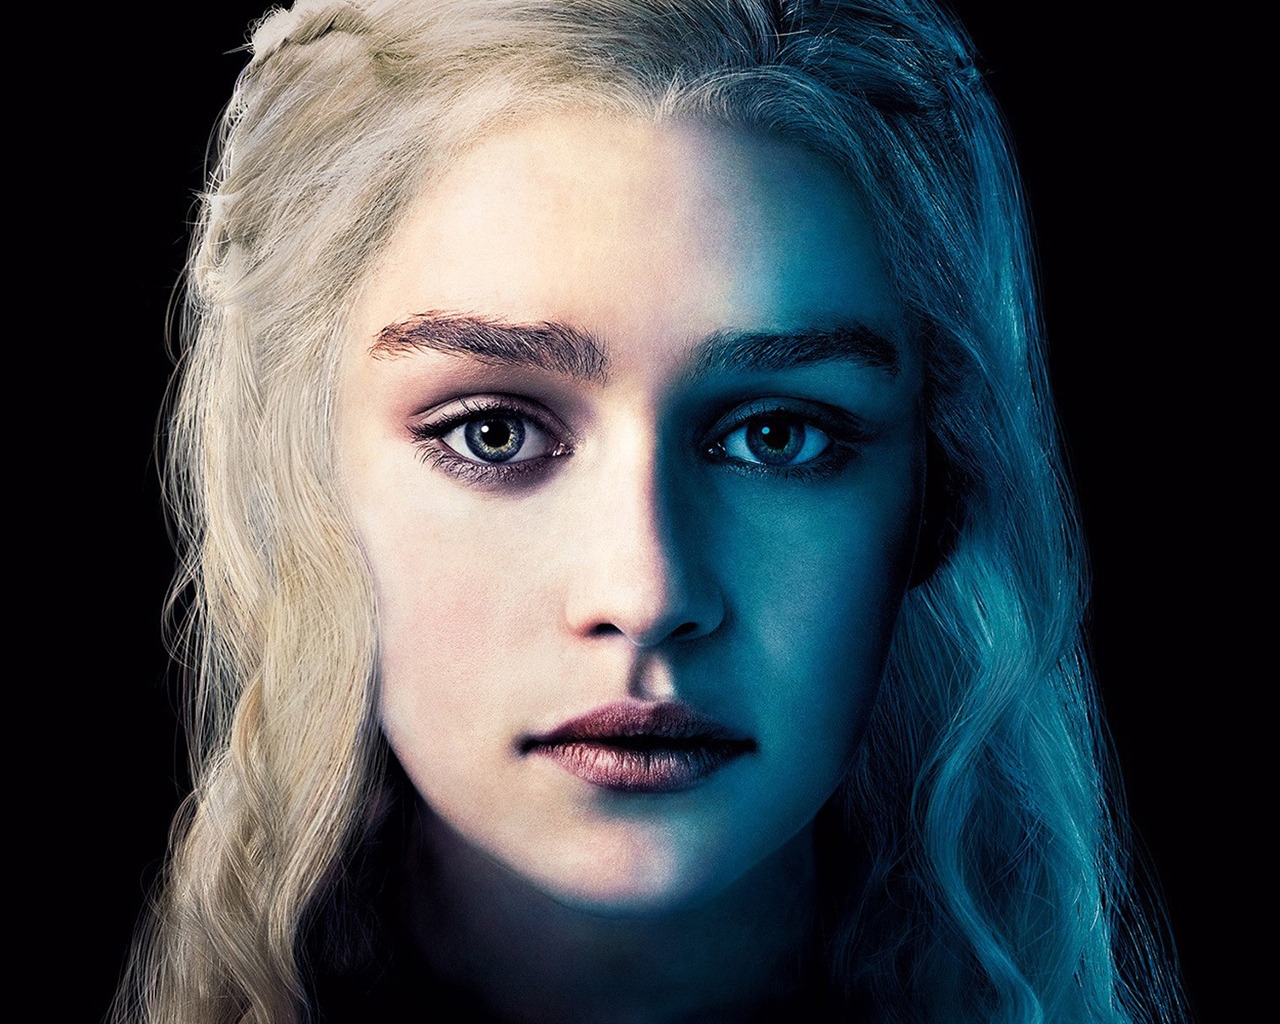 Daenerys Targaryen for 1280 x 1024 resolution